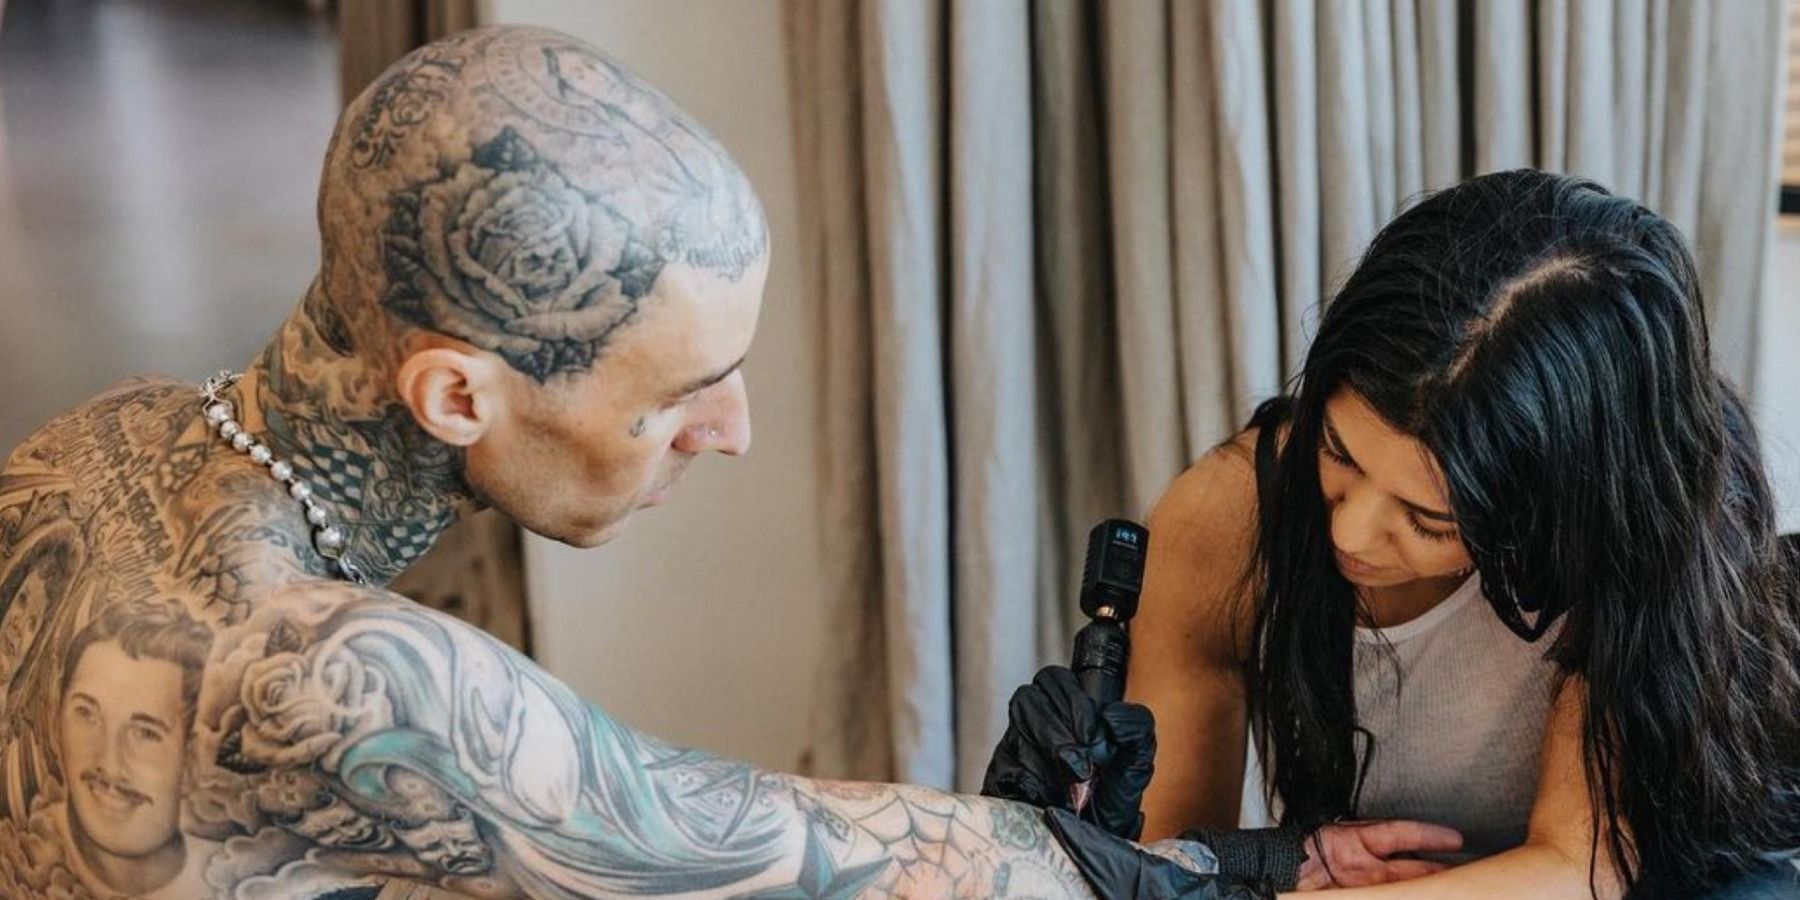 Travis Barker Replies To Tattoo Criticism